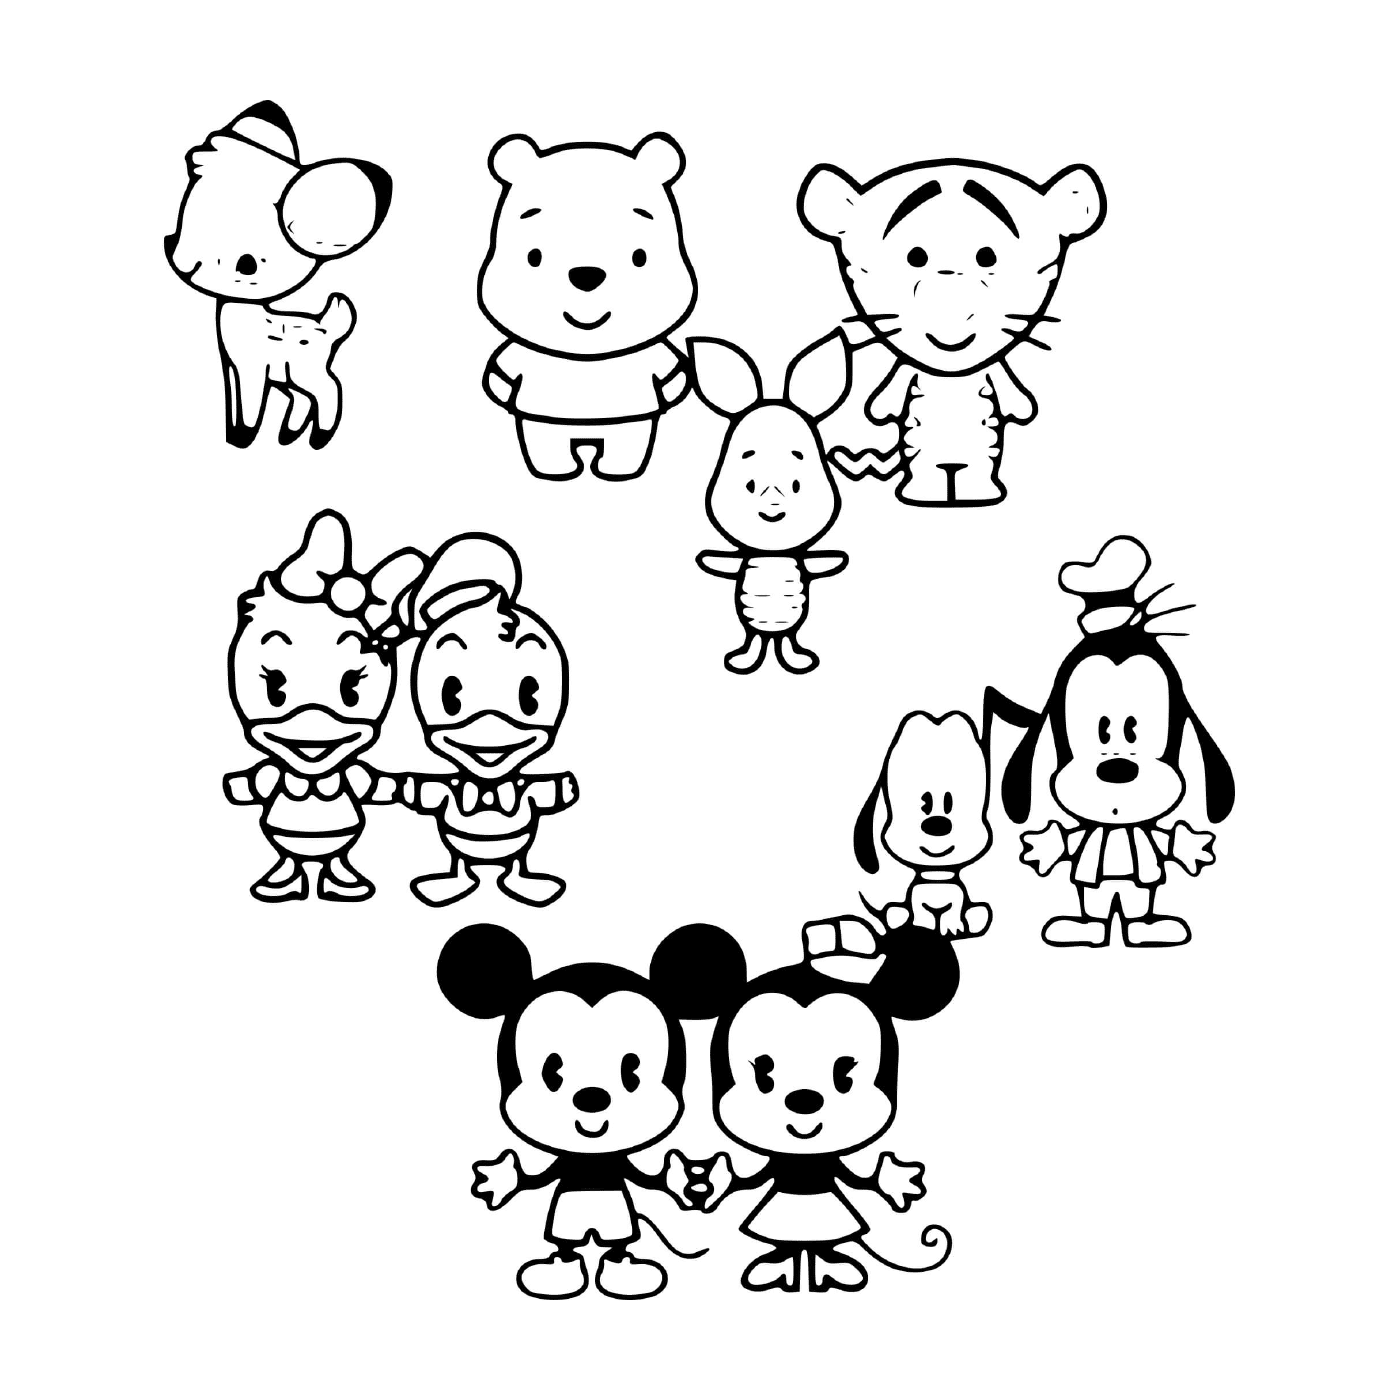  Personajes de dibujos animados de Disney 